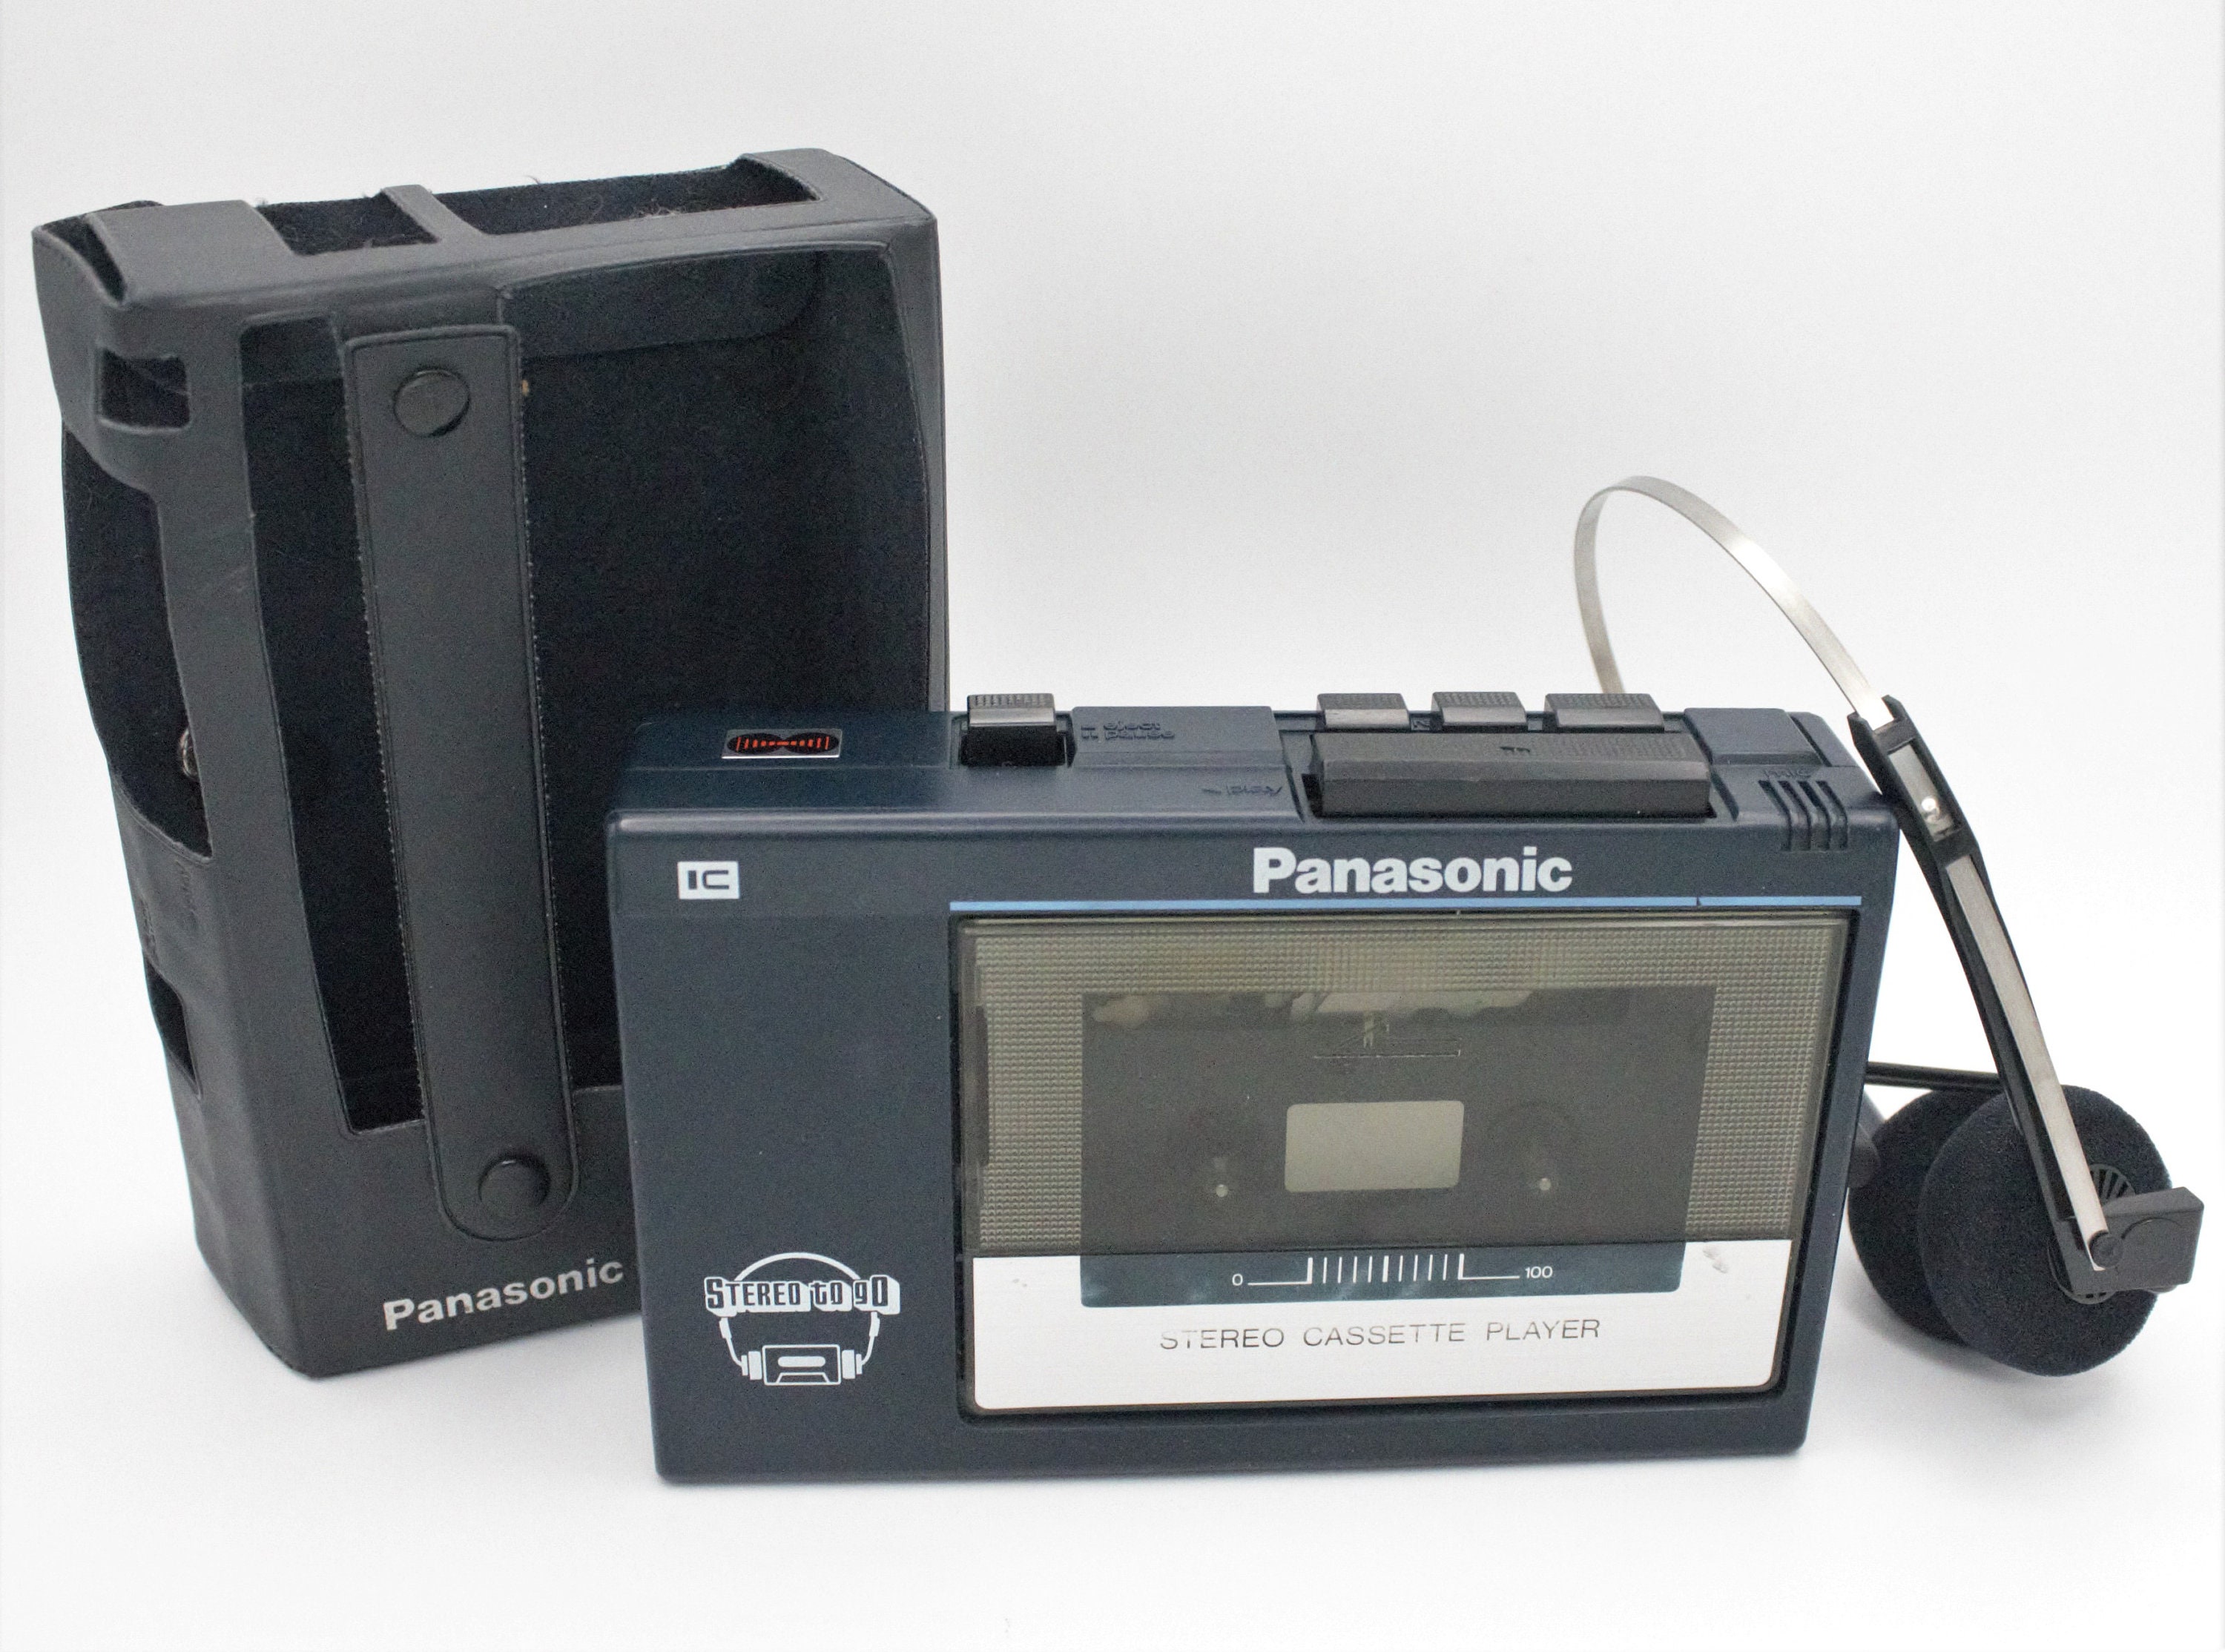 Panasonic RX-5150 Boombox, RX-1924 Portable Stereo Radio Cassette